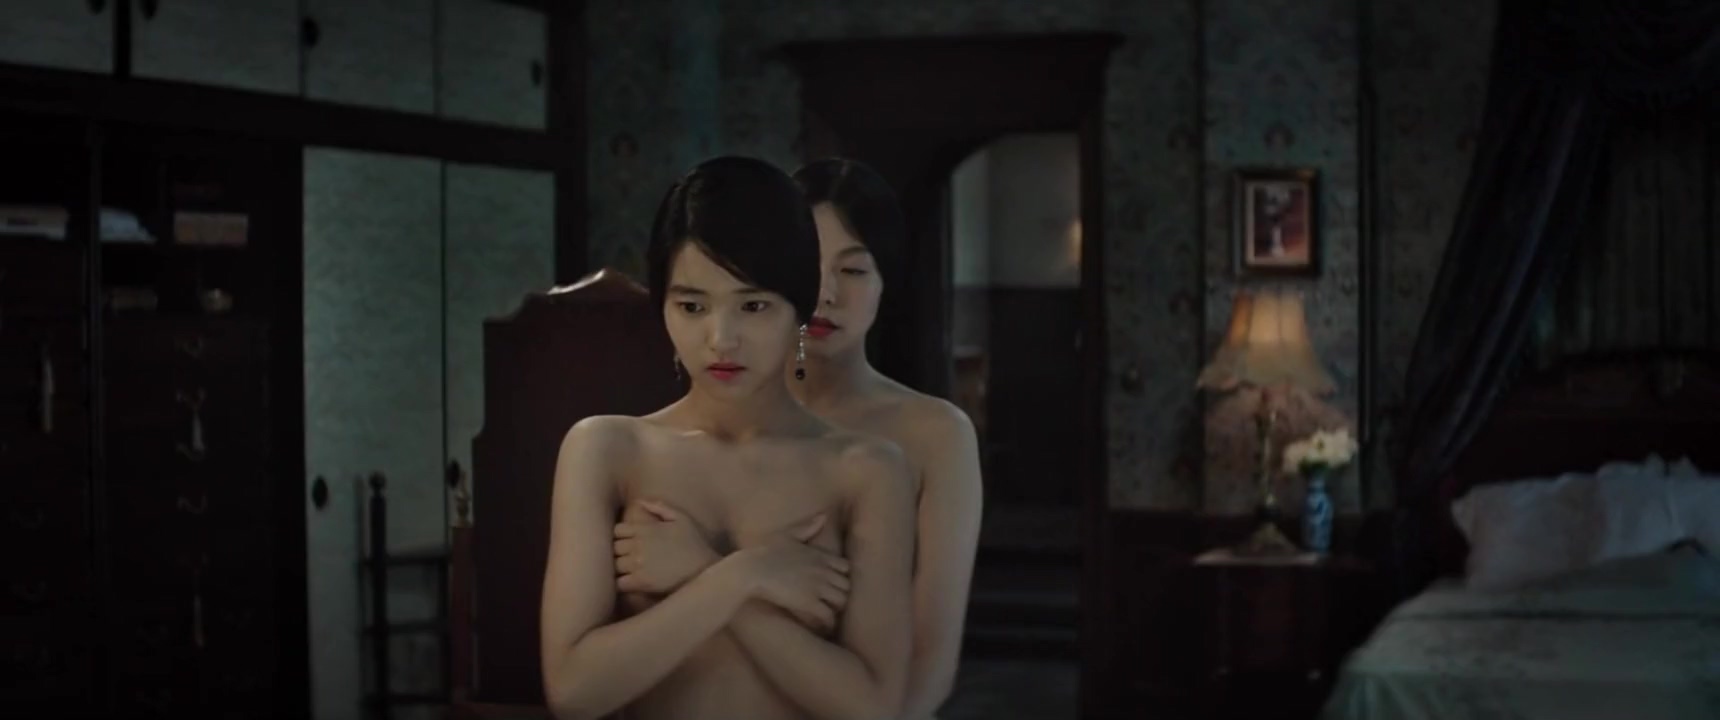 Lesbian asian movie sex scene interracial